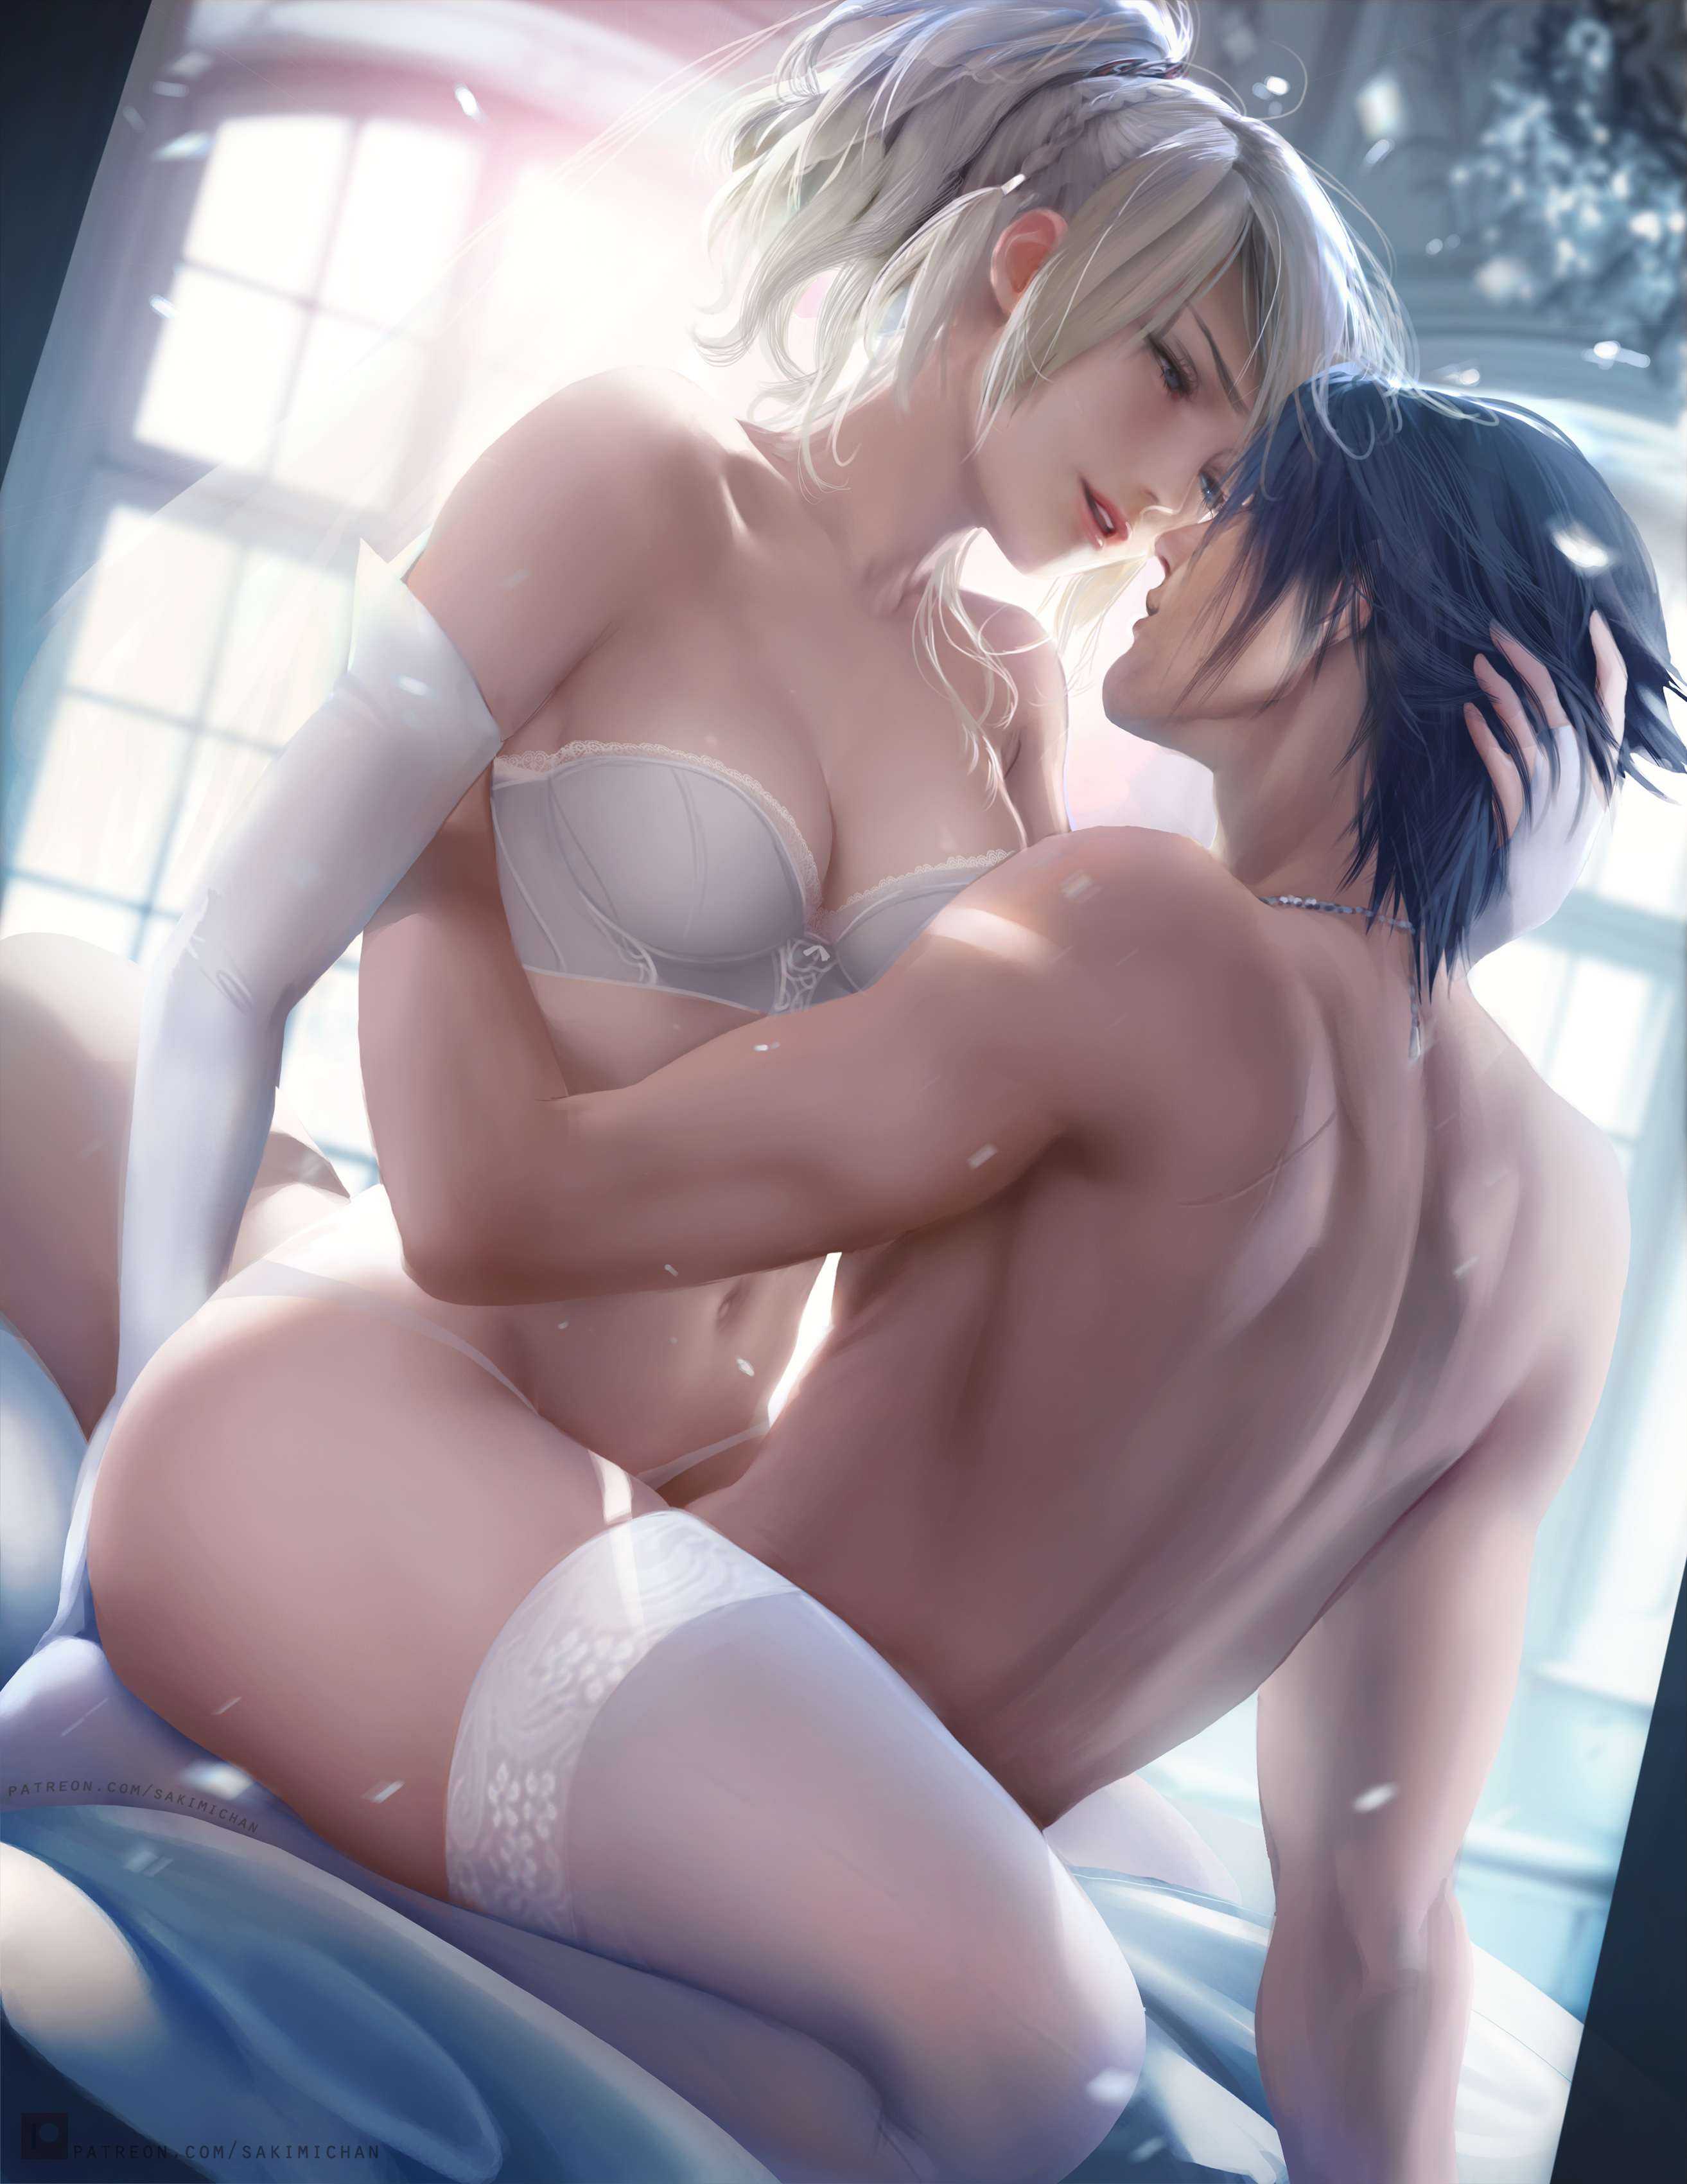 General 2627x3400 Sakimichan illustration boobs indoors Final Fantasy XV implied sex Lunafreya Nox Fleuret white stockings lingerie digital art